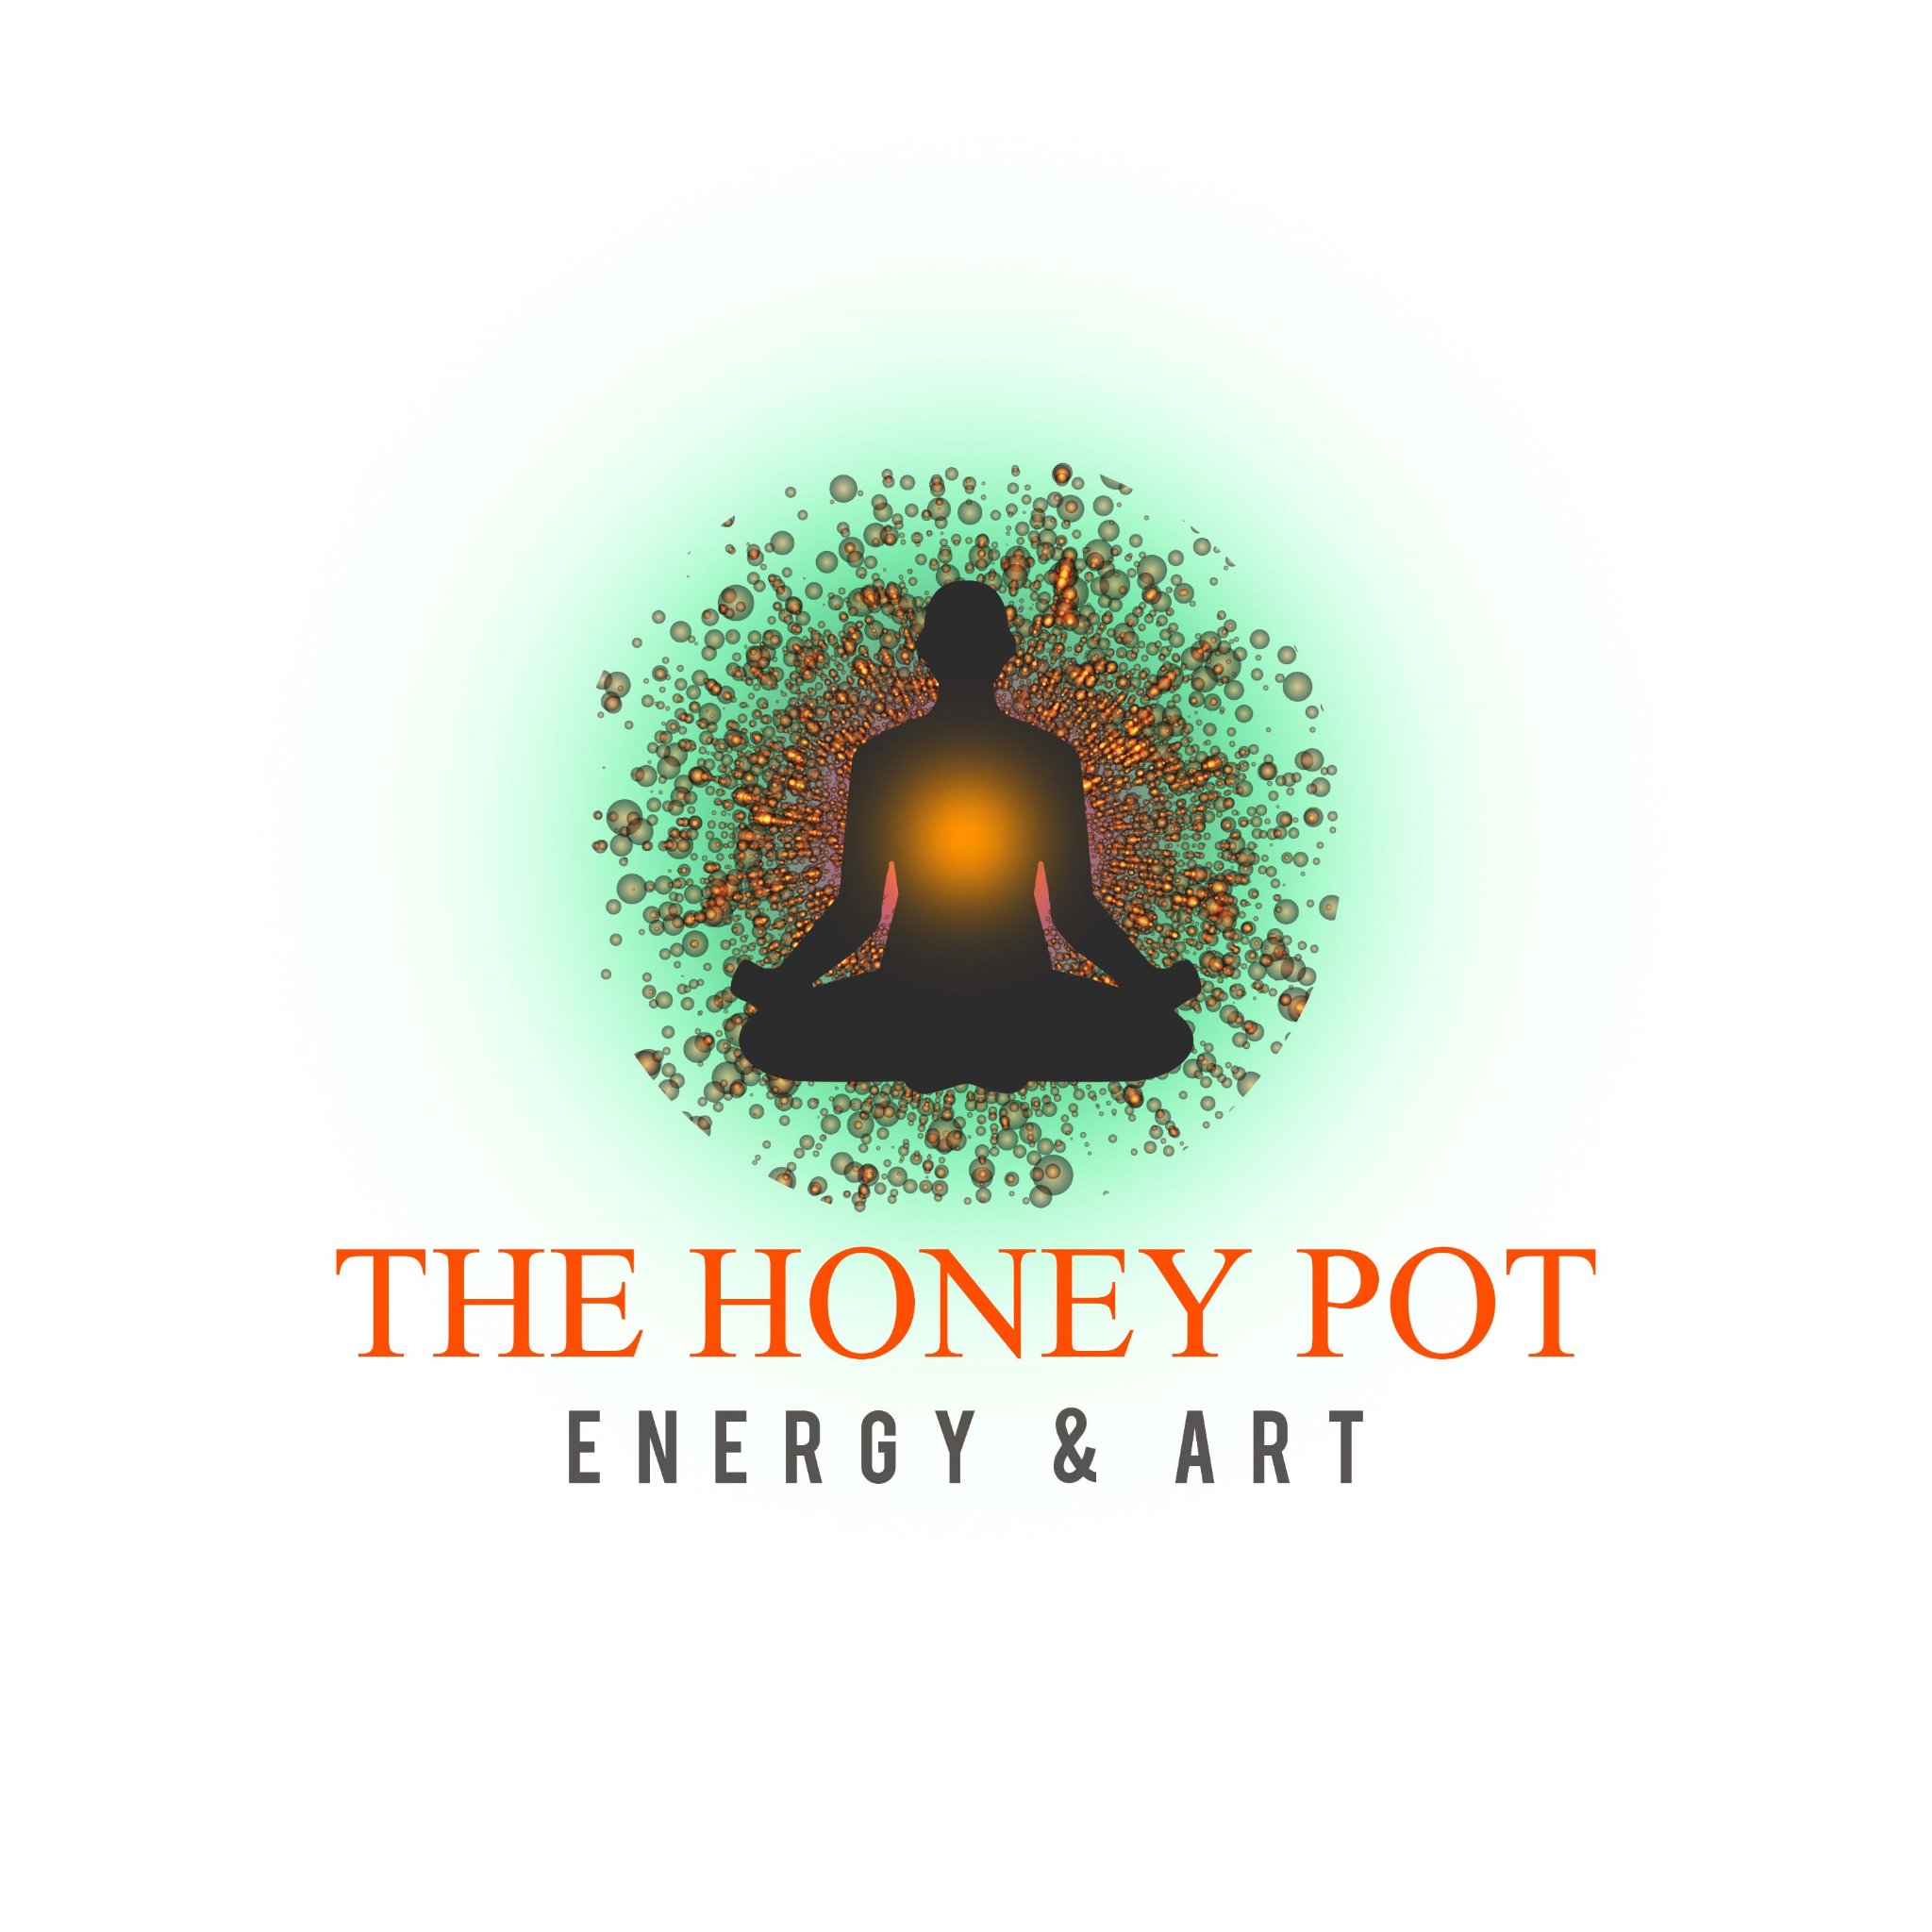 The Honey Pot-Metaphysical Boutique in Atlanta, GA
https://t.co/eN6zn8Qops 
1083 Euclid Ave 30307
@thehoneypotl5p